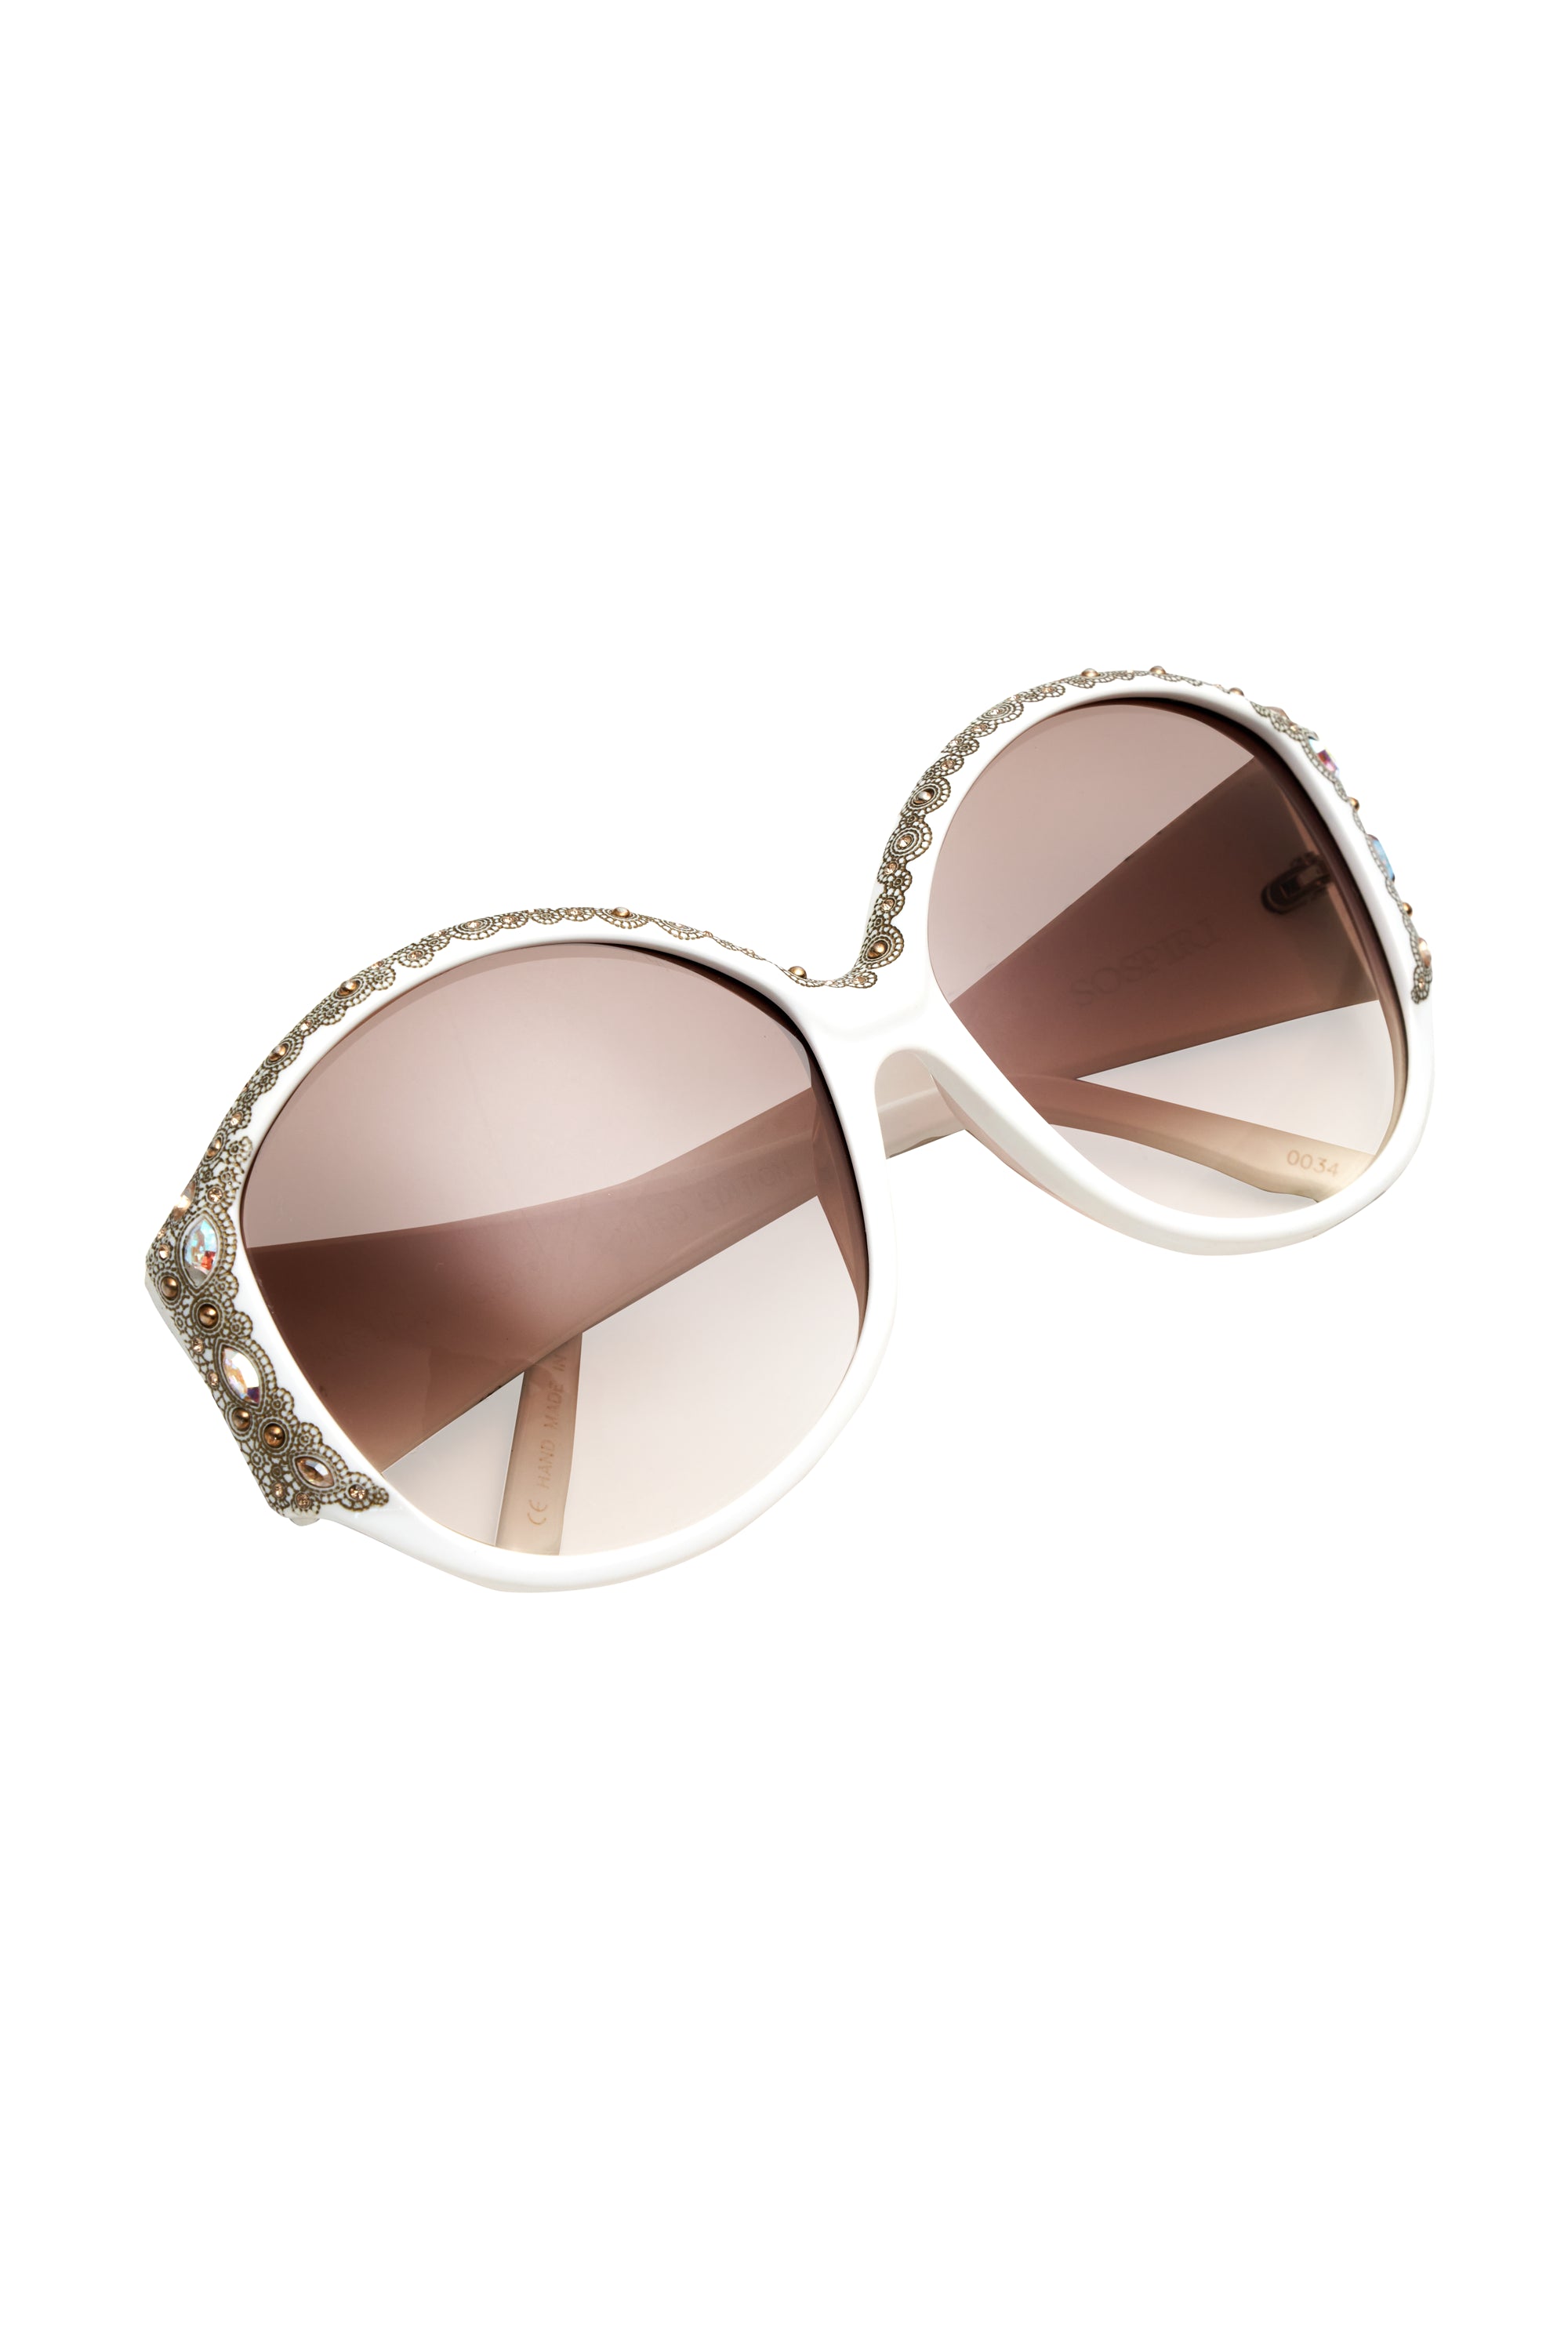 Sospiri White Heavily Embellished Crystal Sunglasses